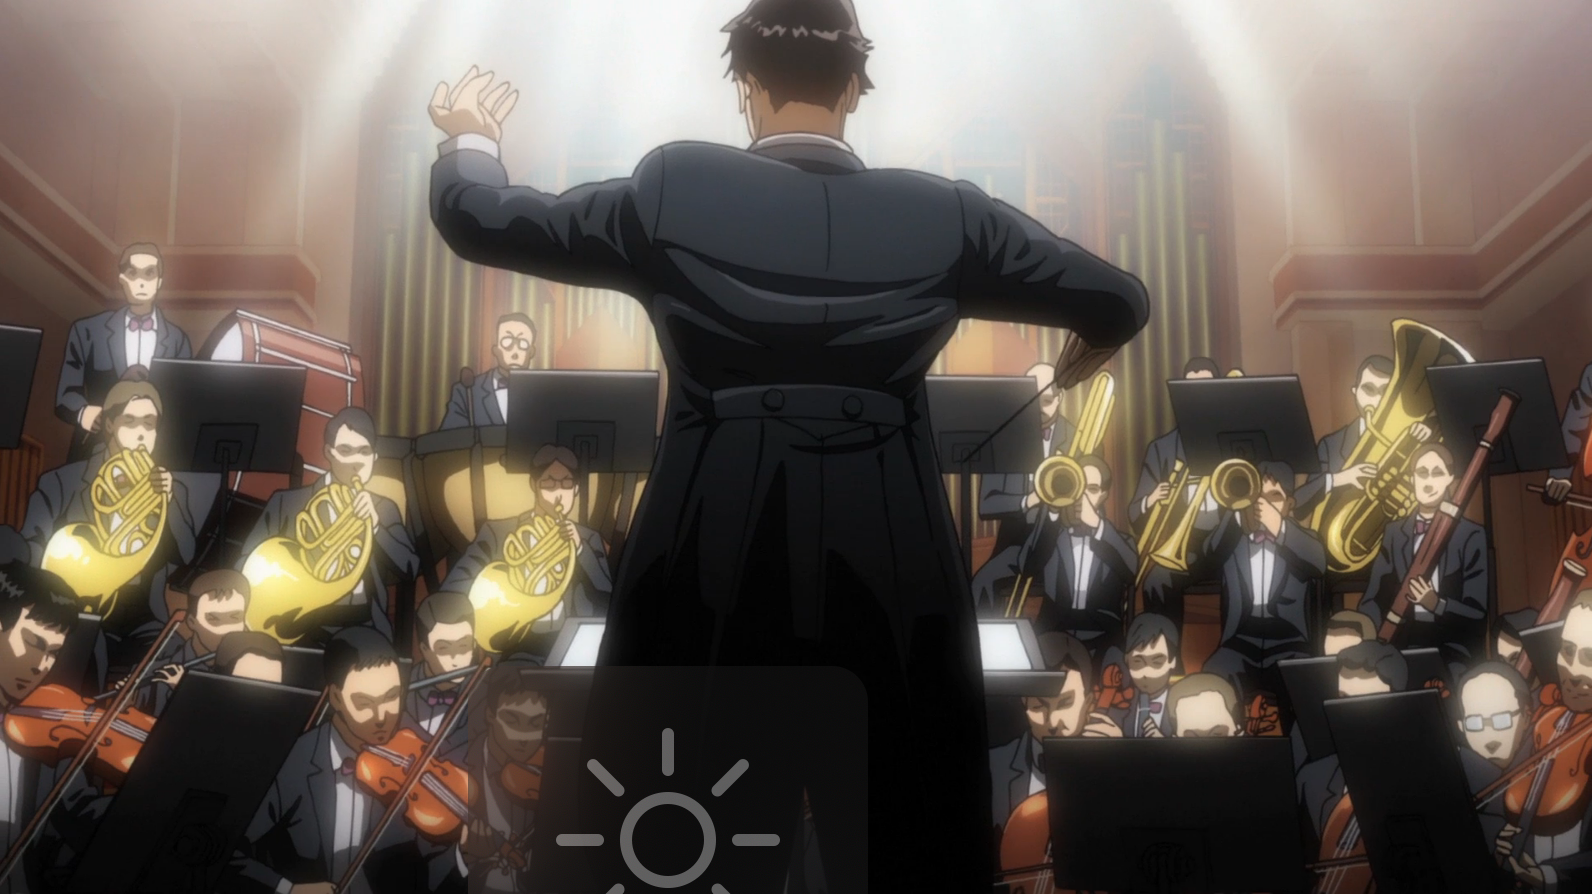 Haikyuu Season 1 ENG DUB (19. The Conductor) - BiliBili